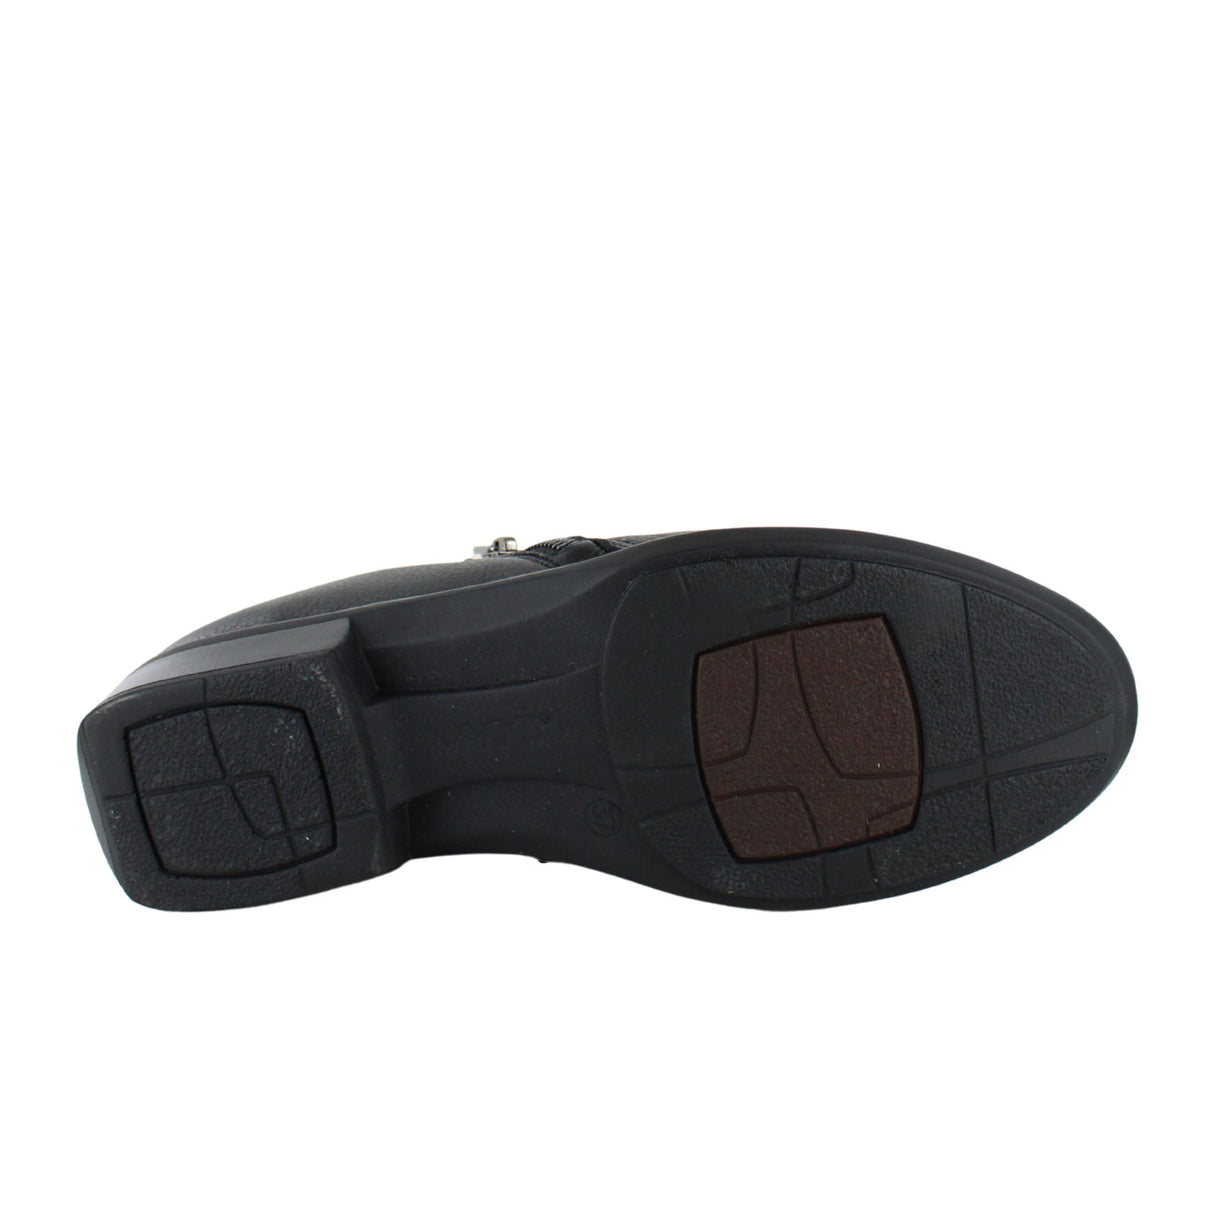 Naot Autan Slip On (Women) - Soft Black Leather Dress-Casual - Slip Ons - The Heel Shoe Fitters